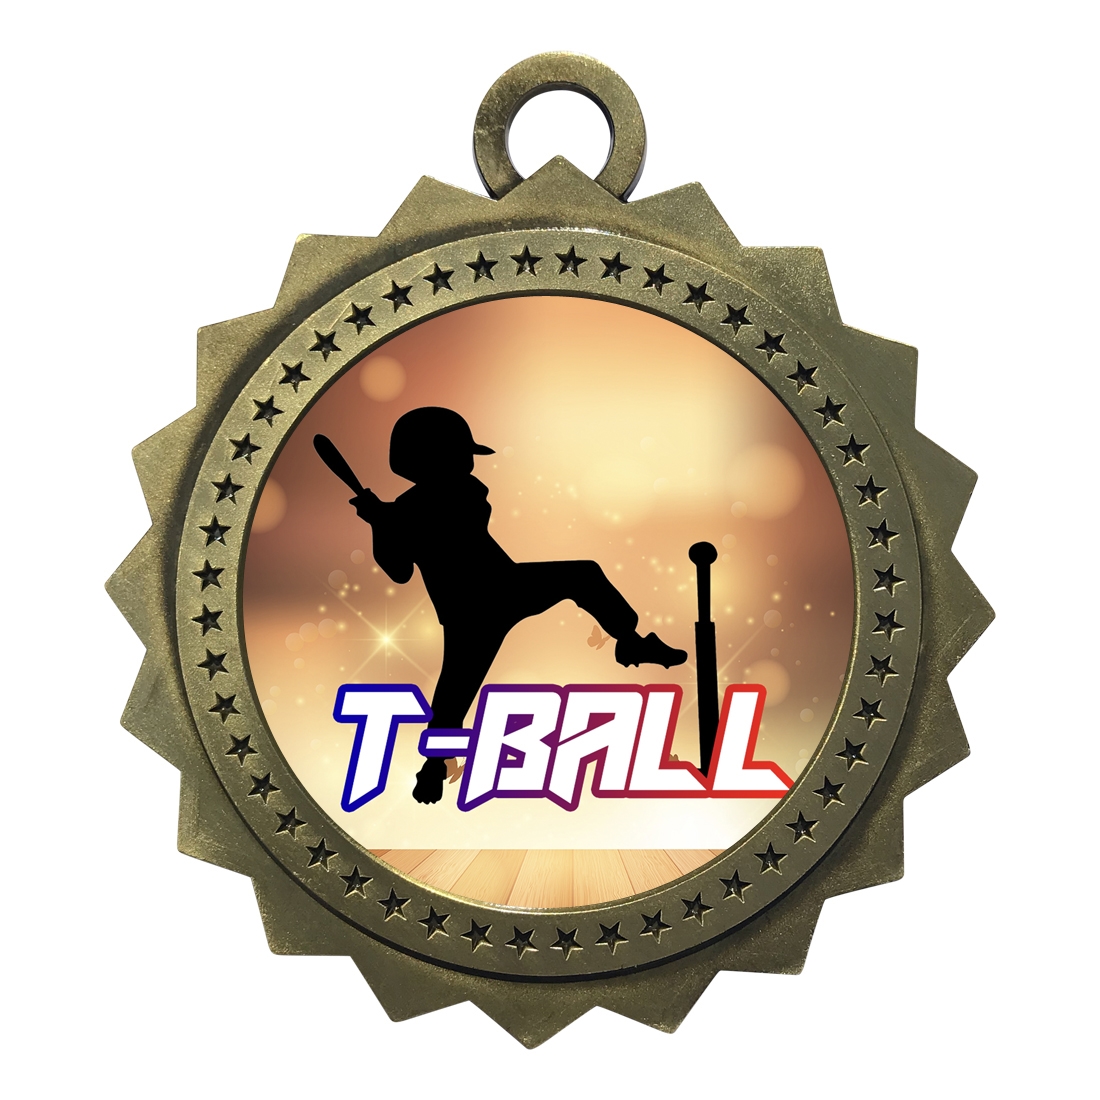 3" T Ball Tee Medal